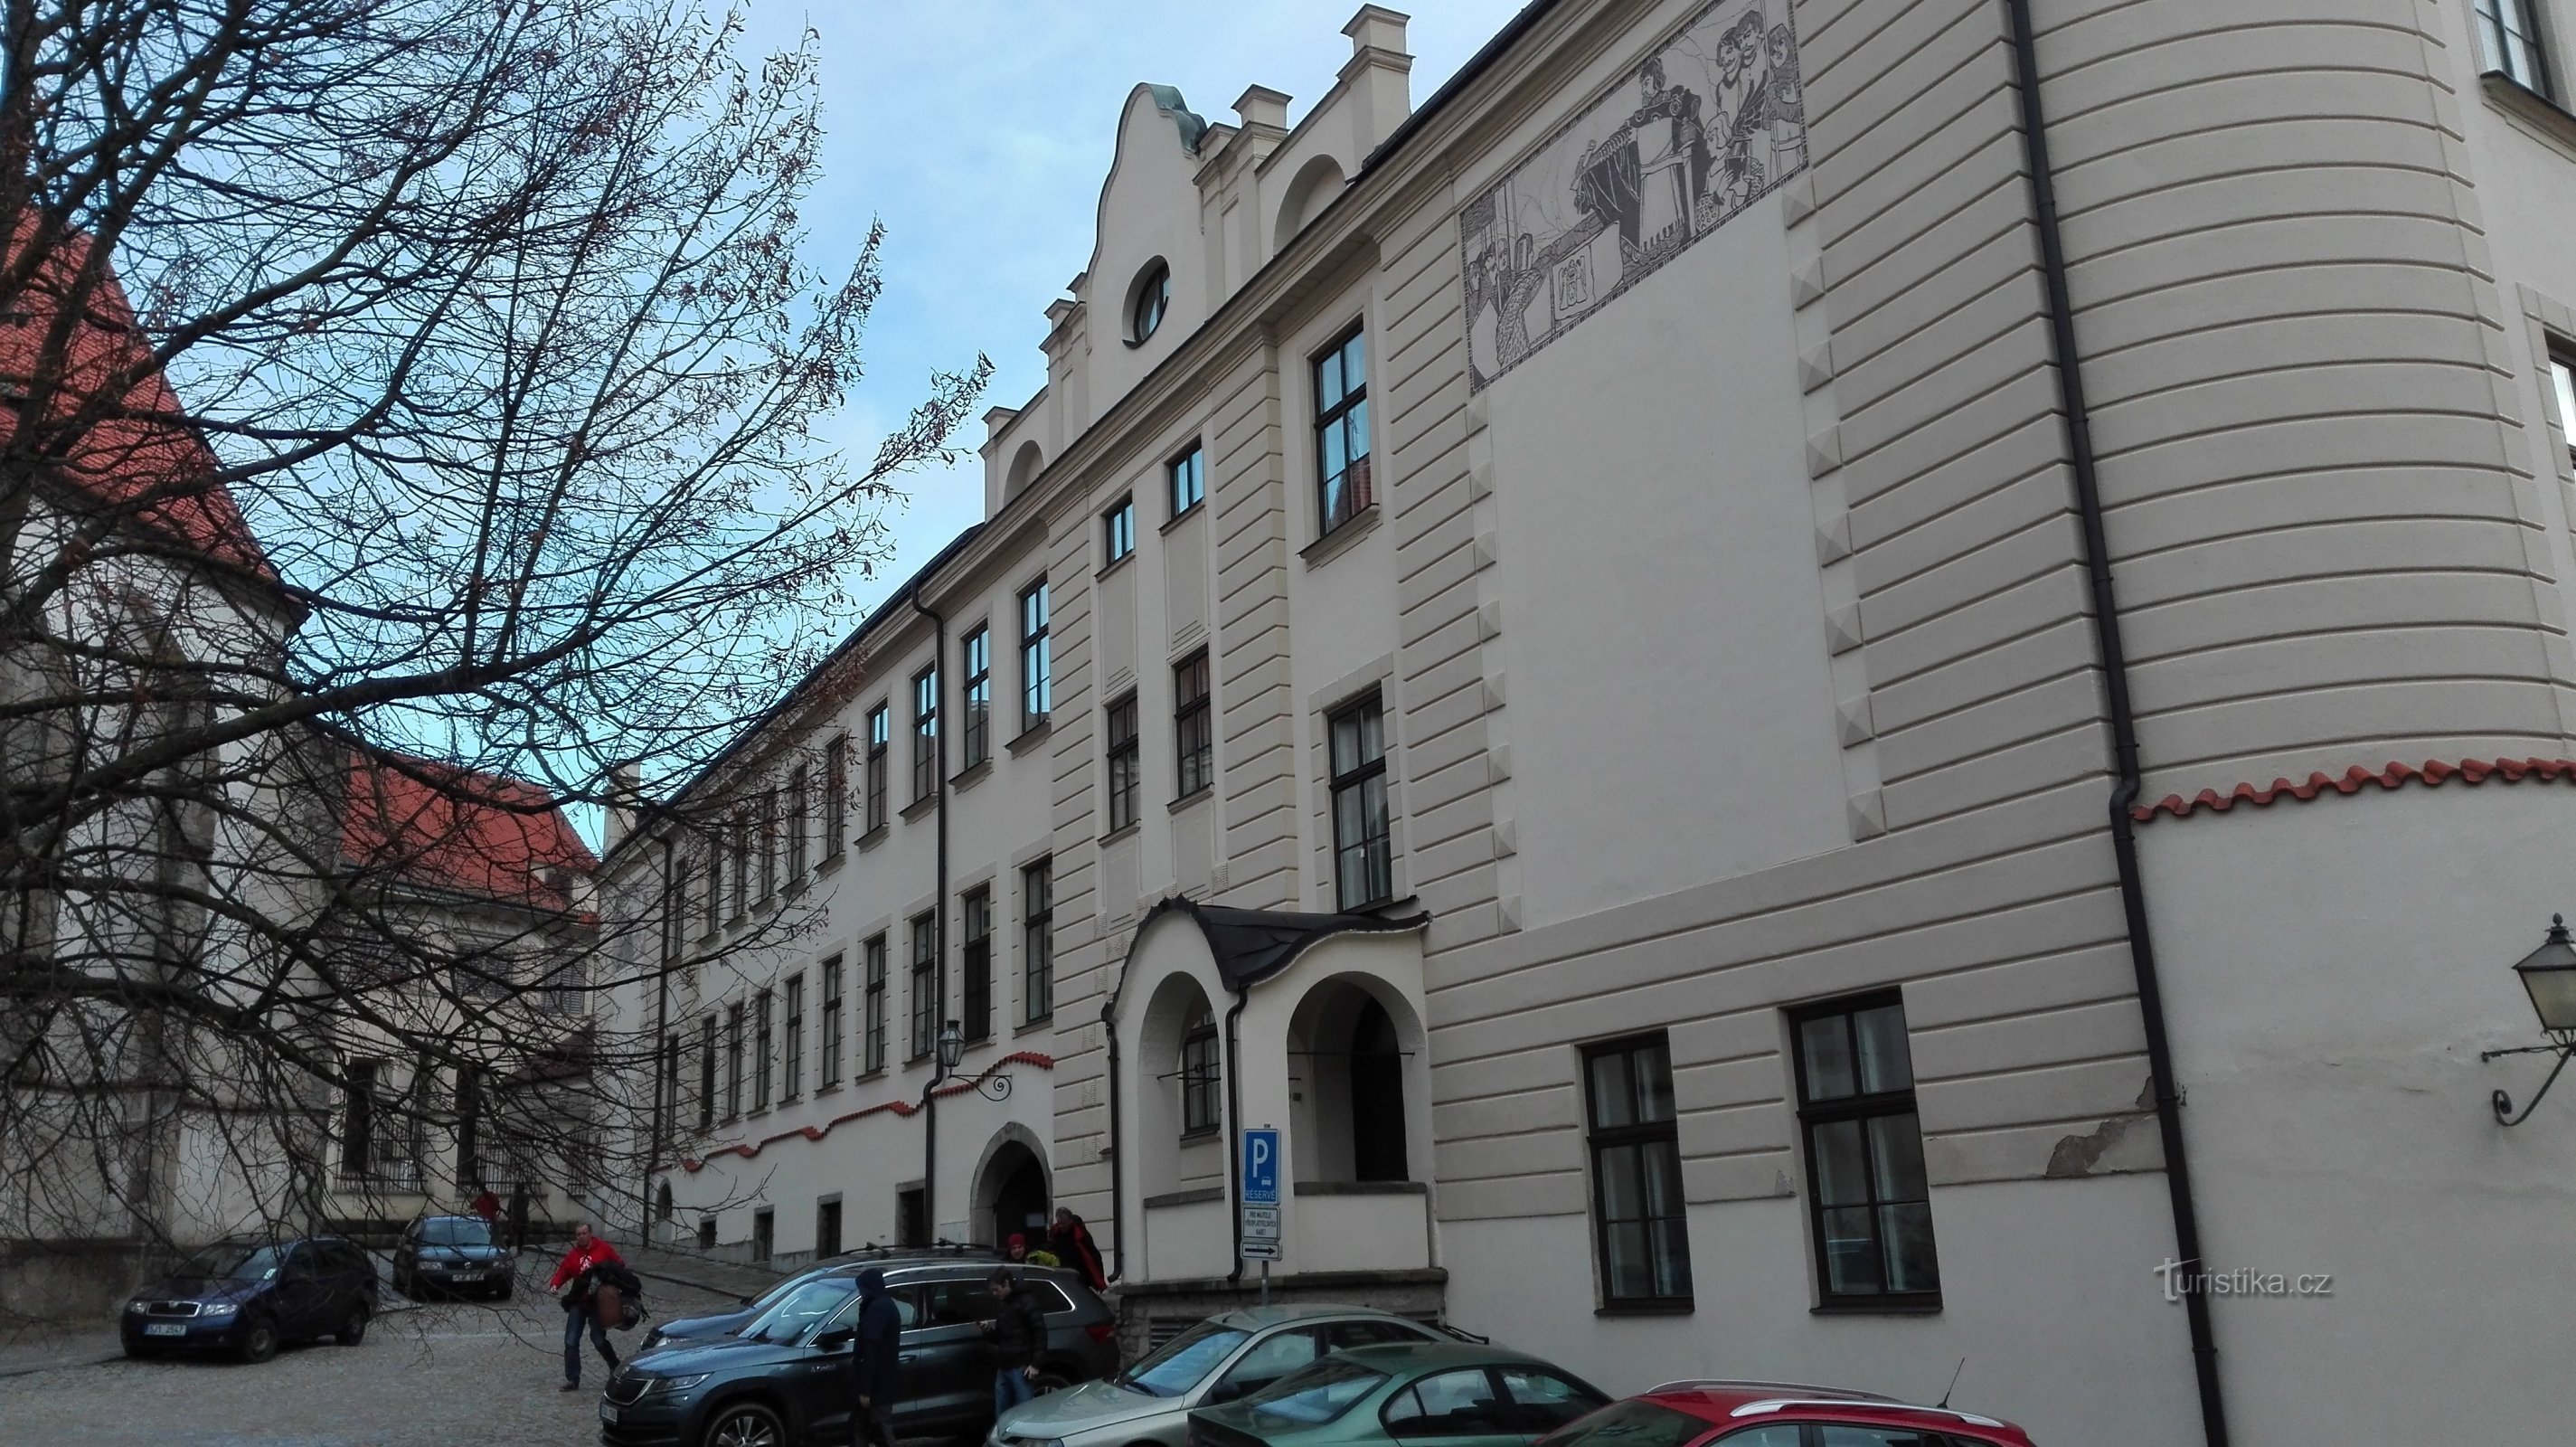 Centrul Universitar Telč - colegiul iezuit.